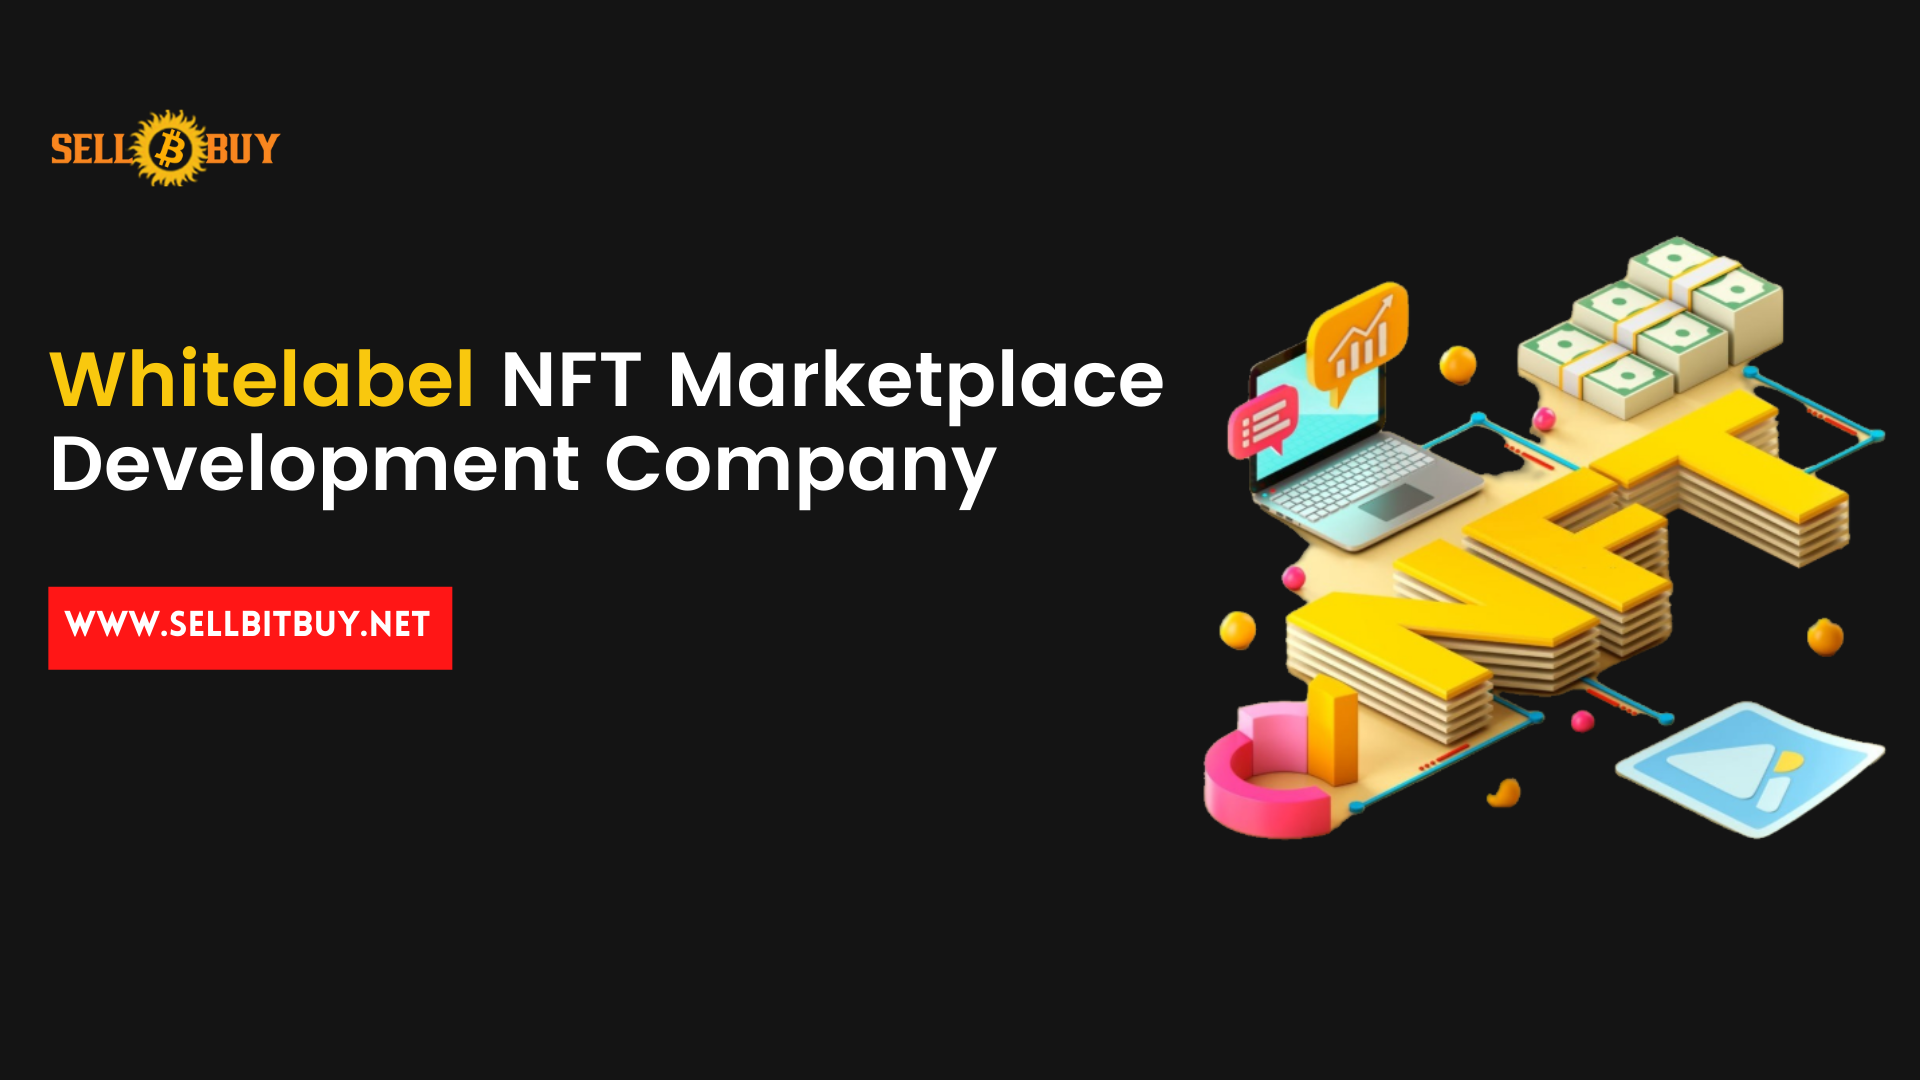 White label NFT Marketplace Development Company